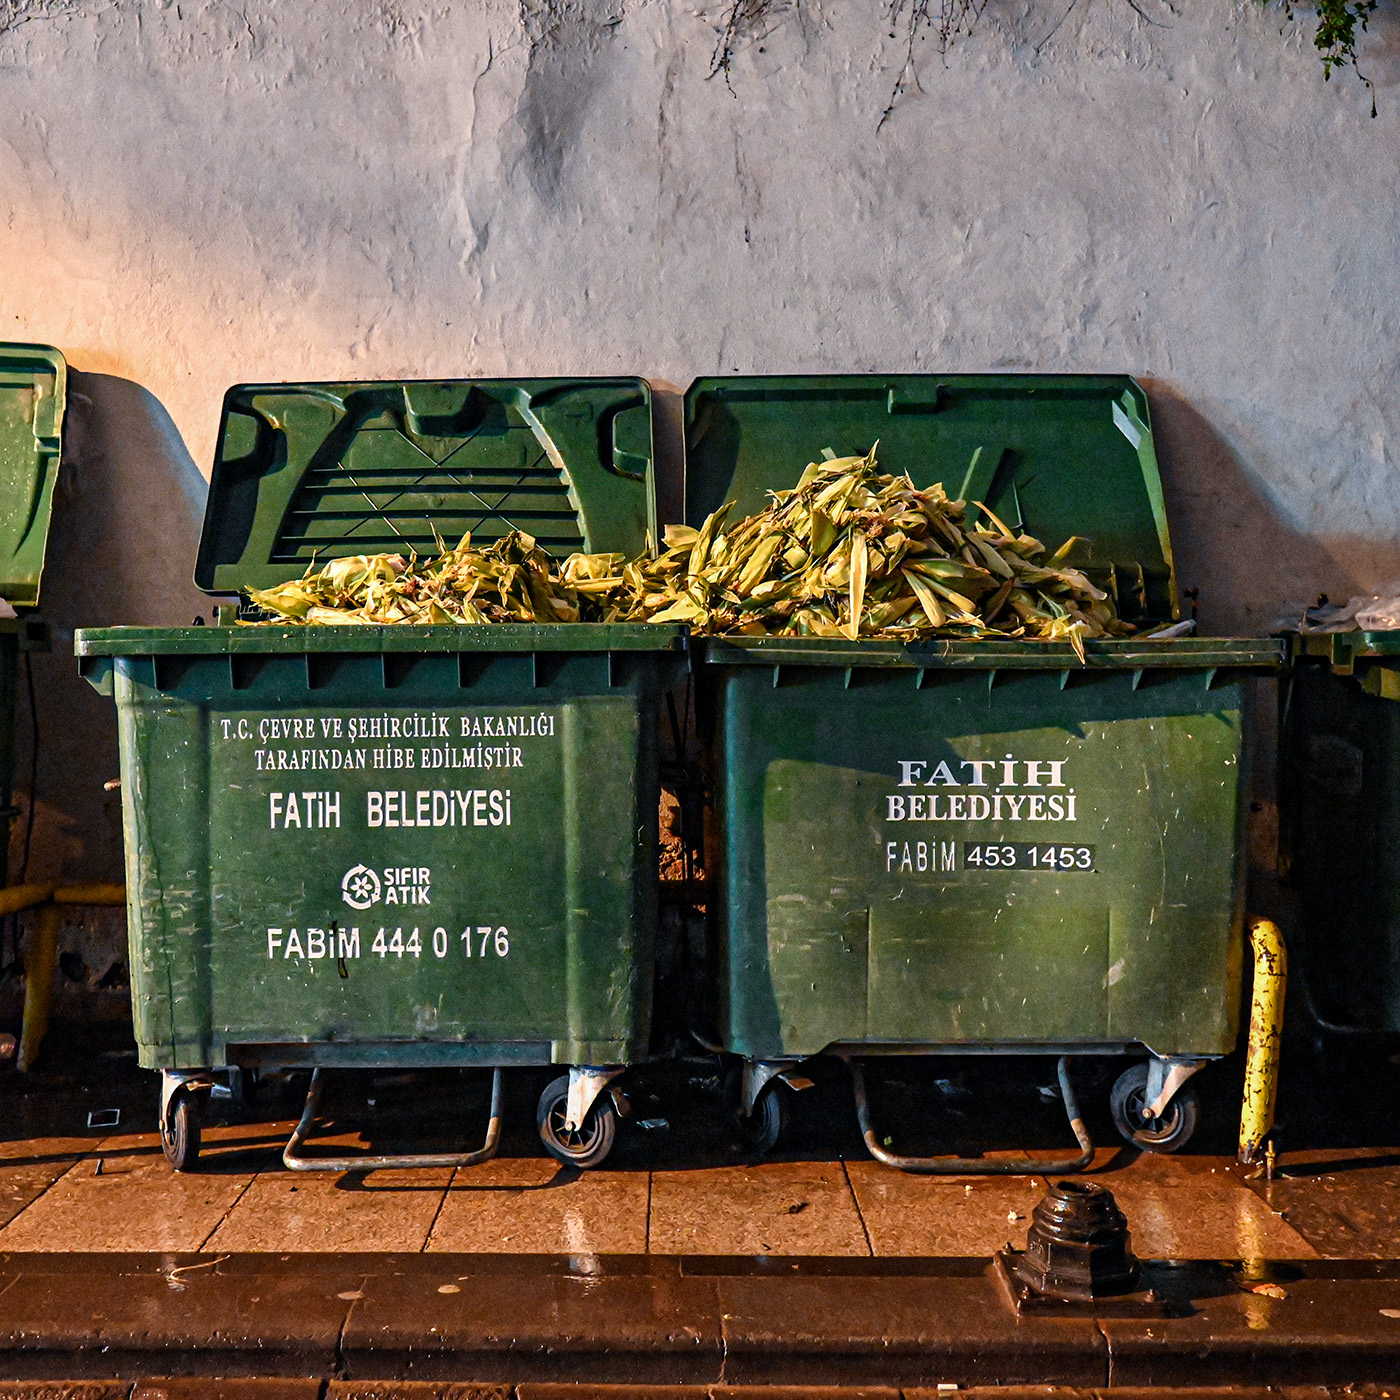 Trash bins overflowing with corn husks